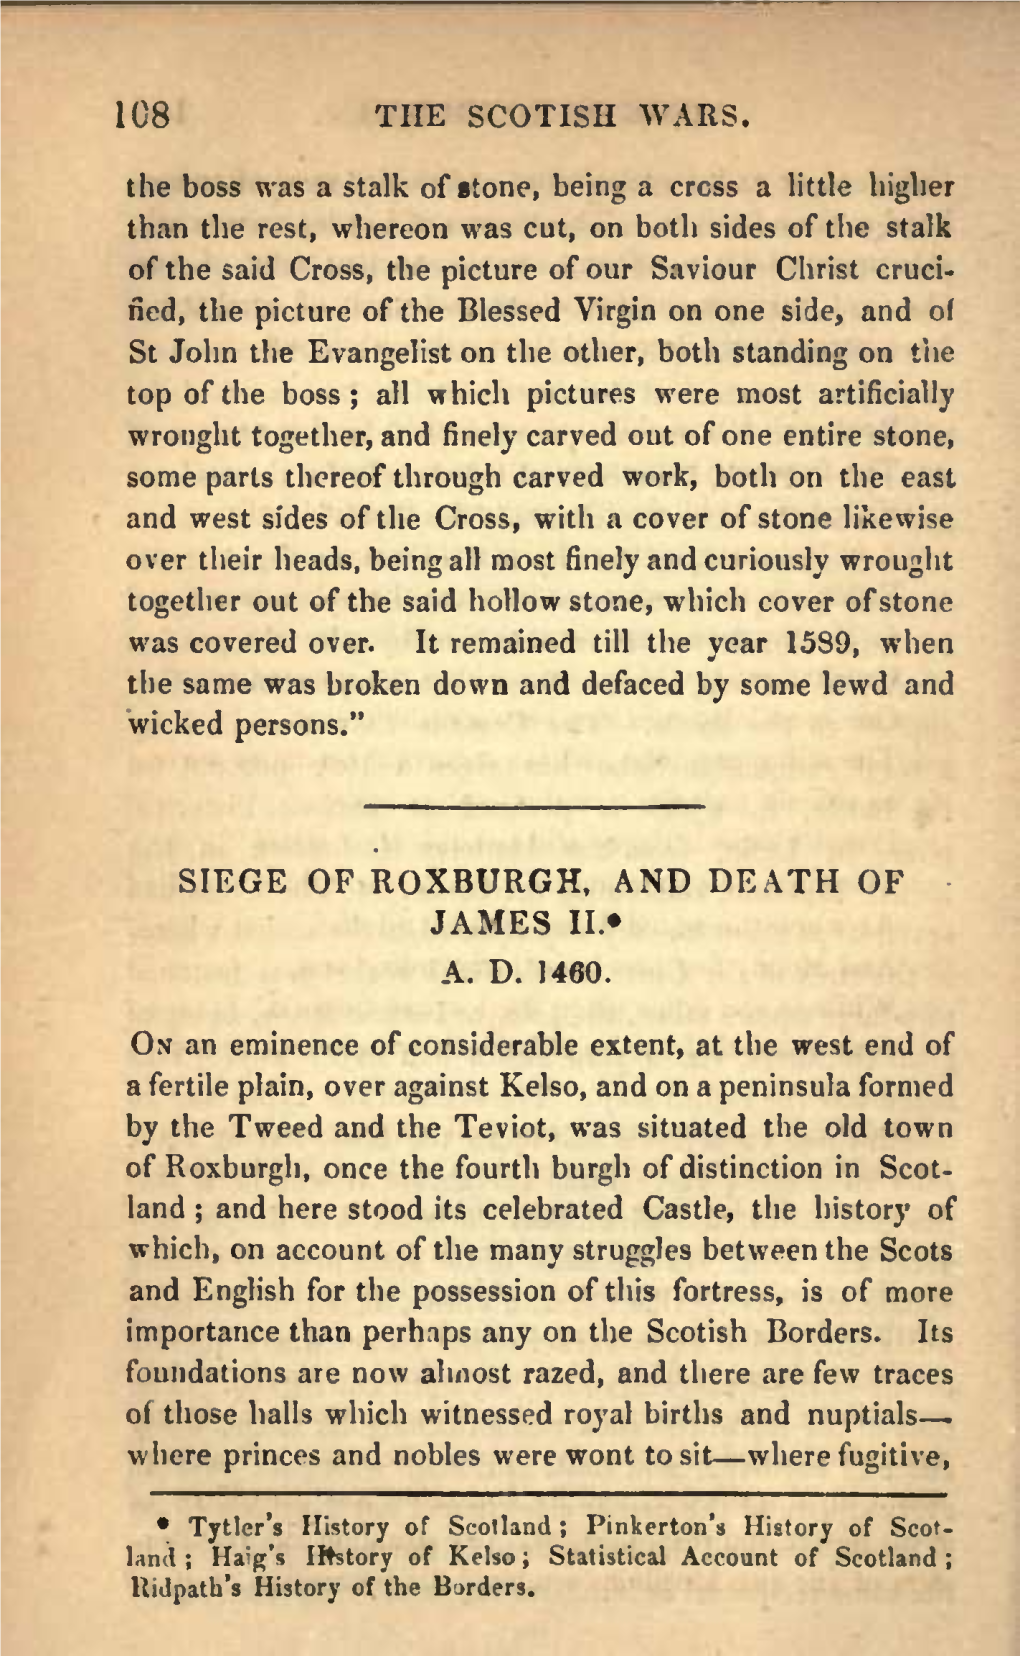 Siege of Roxburgh and Death of James II